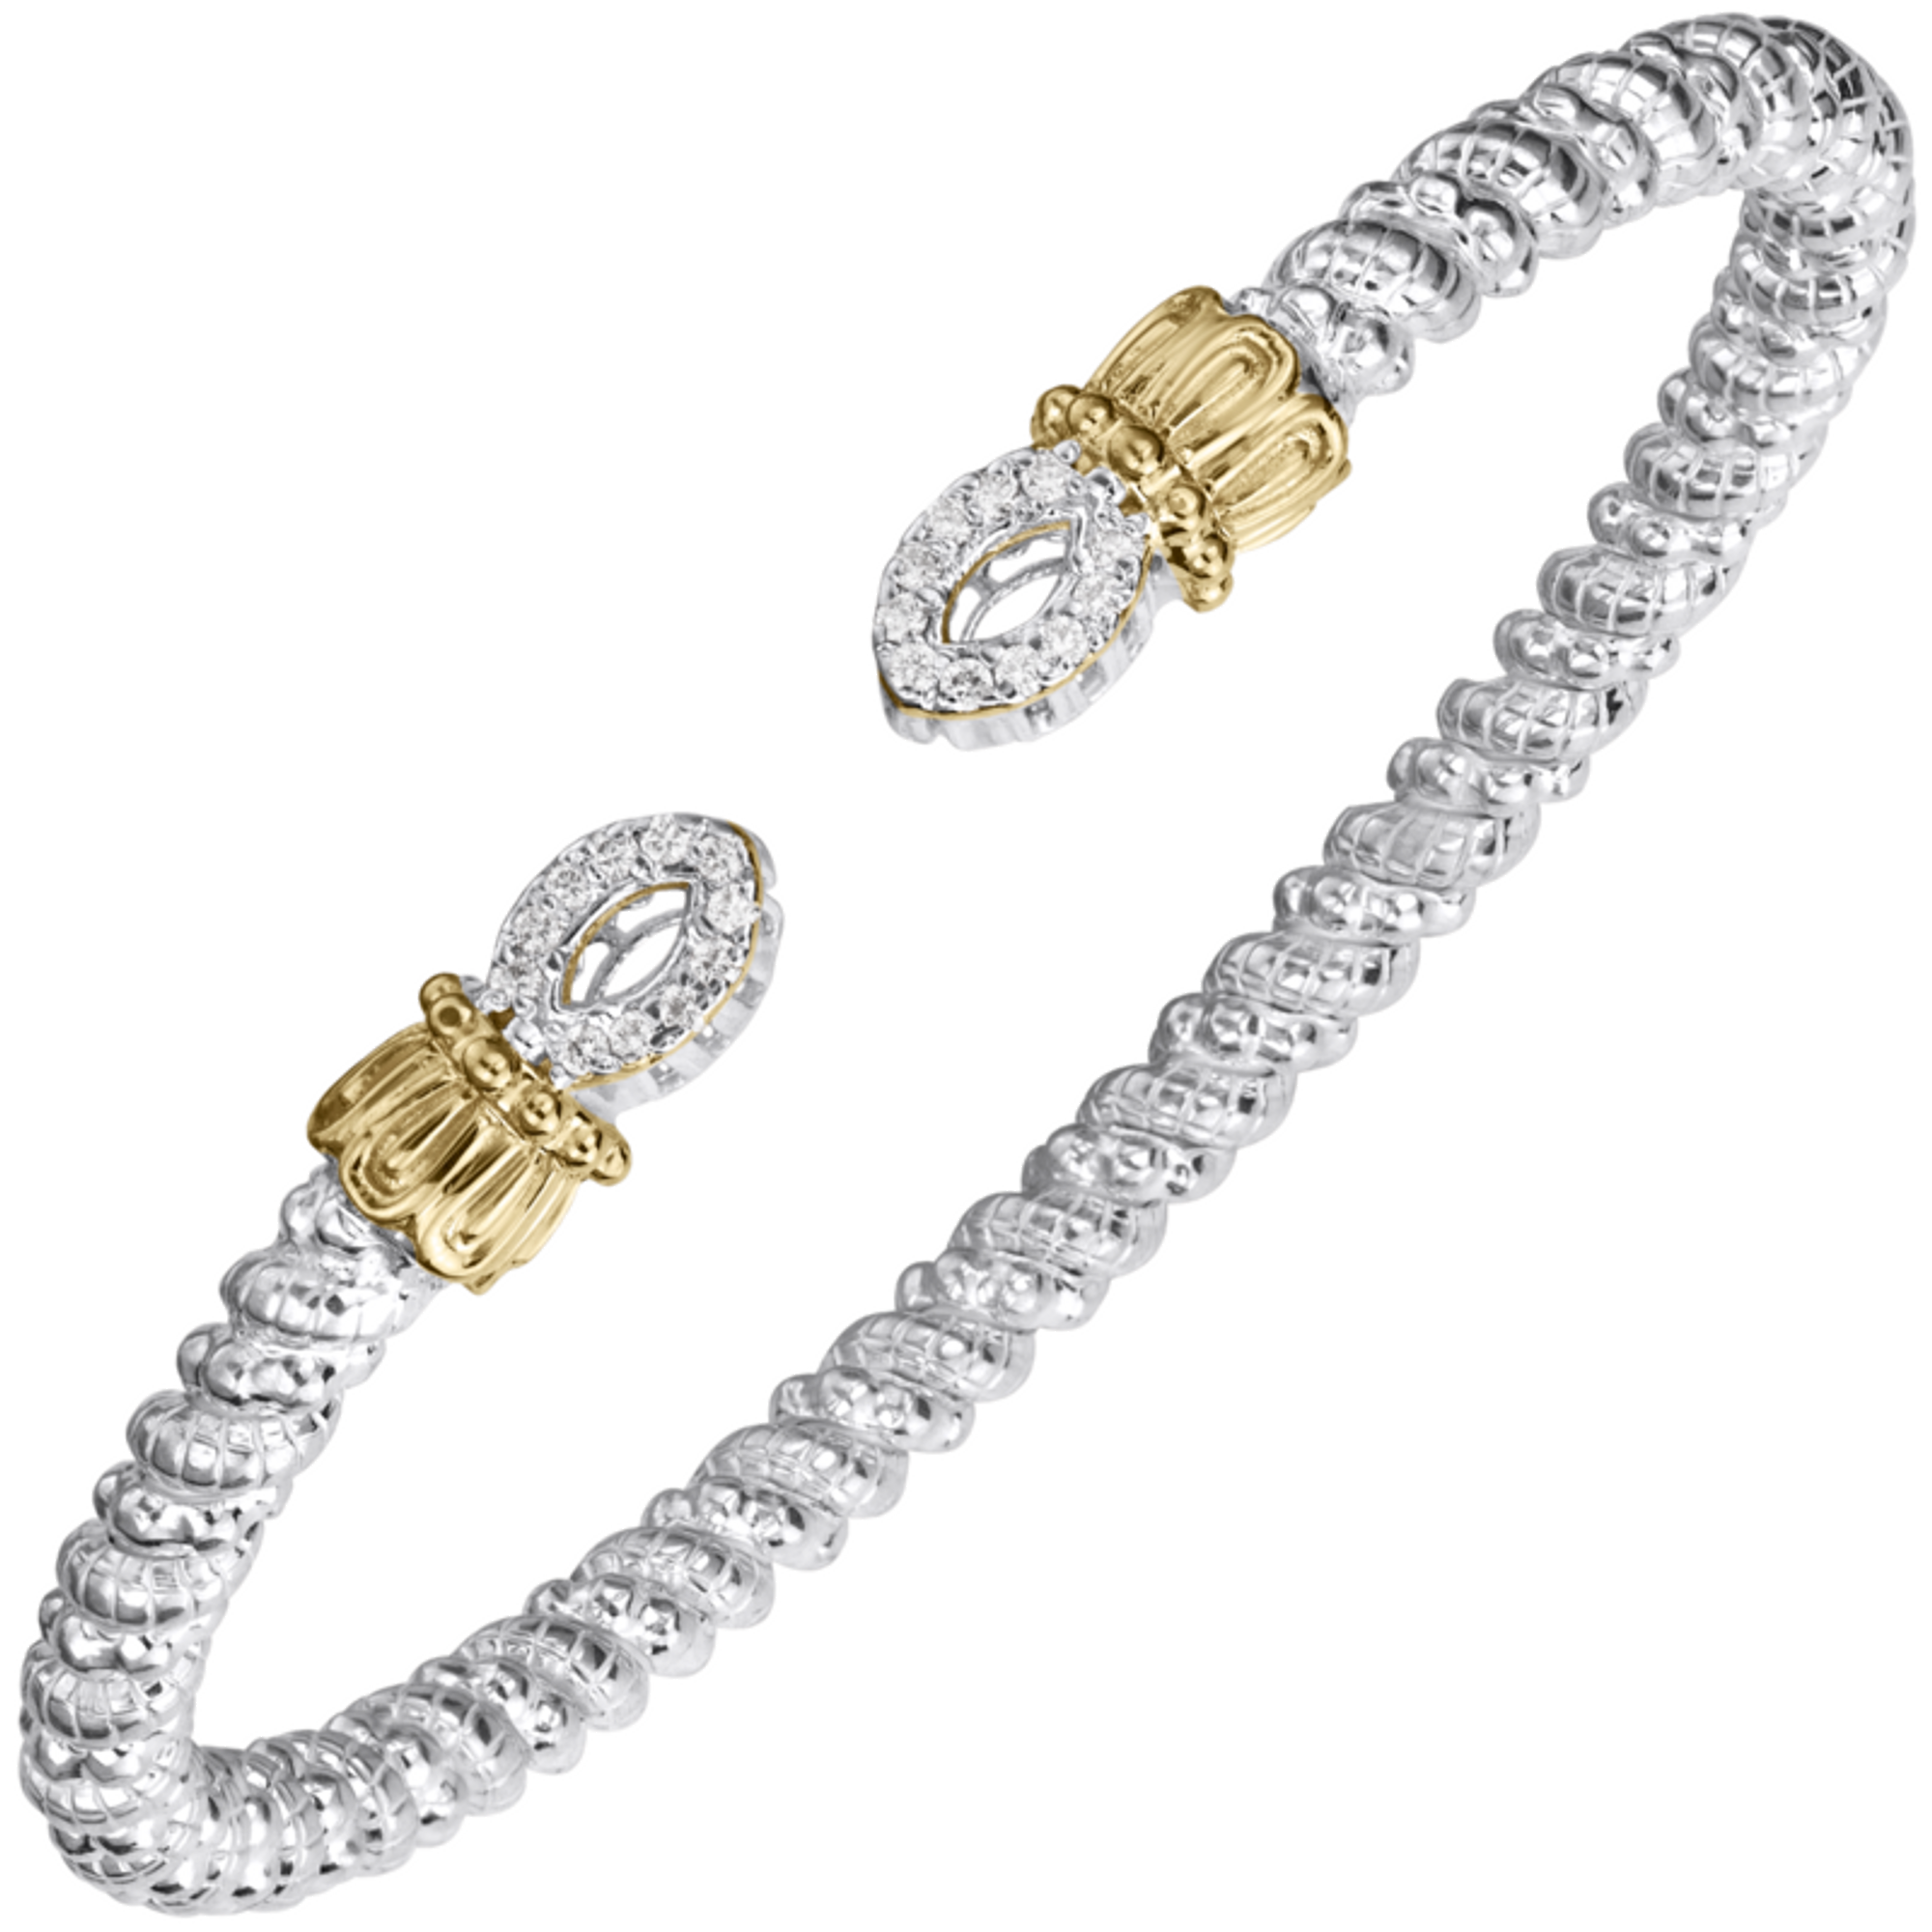 Marquise Diamond Ends Bracelet by Alwand Vahan